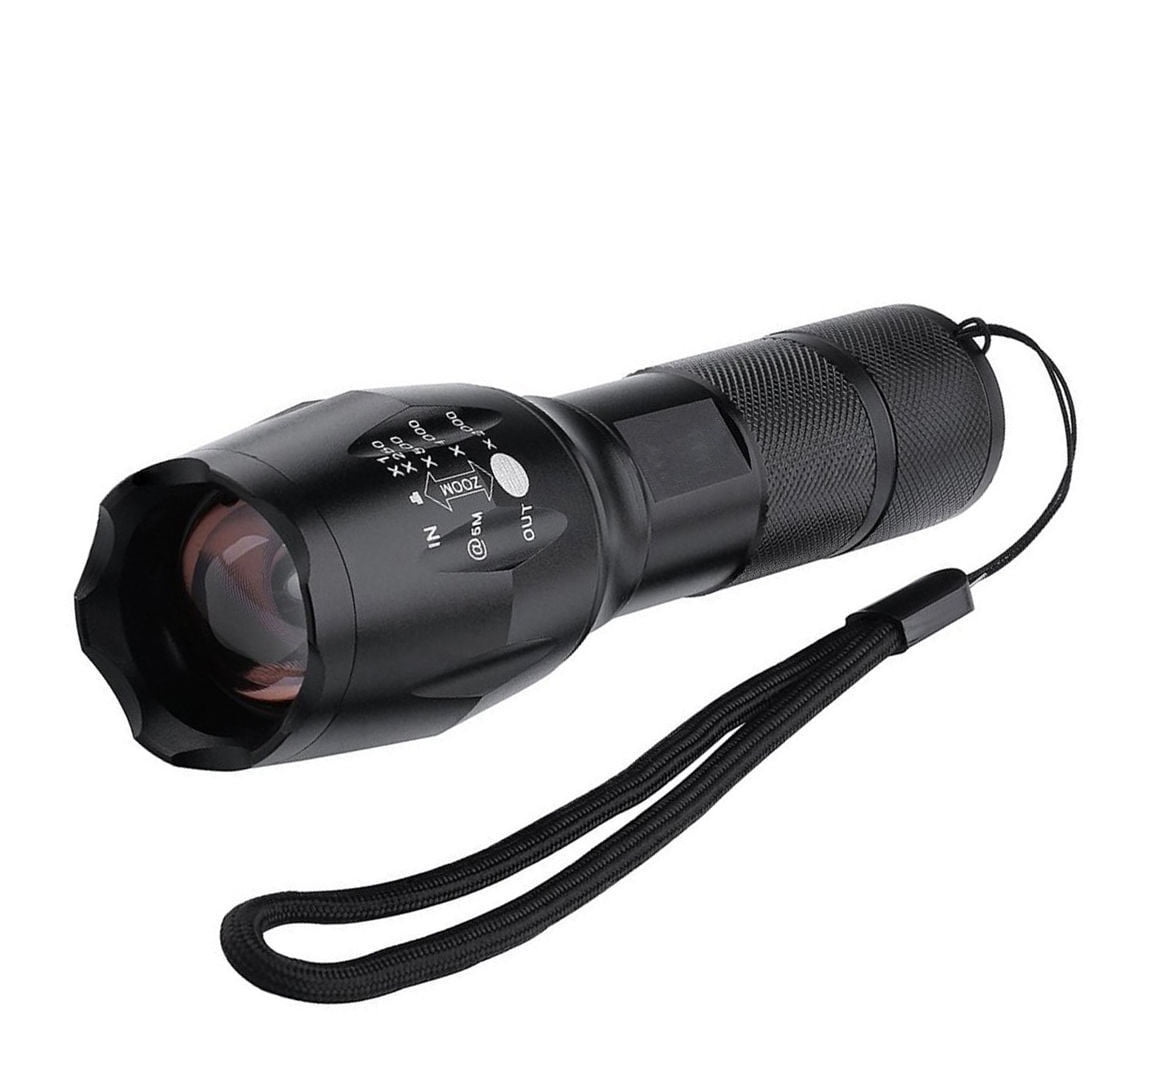 LED Tactical Flashlight Military Grade Torch Small Super Bright Handheld Light~